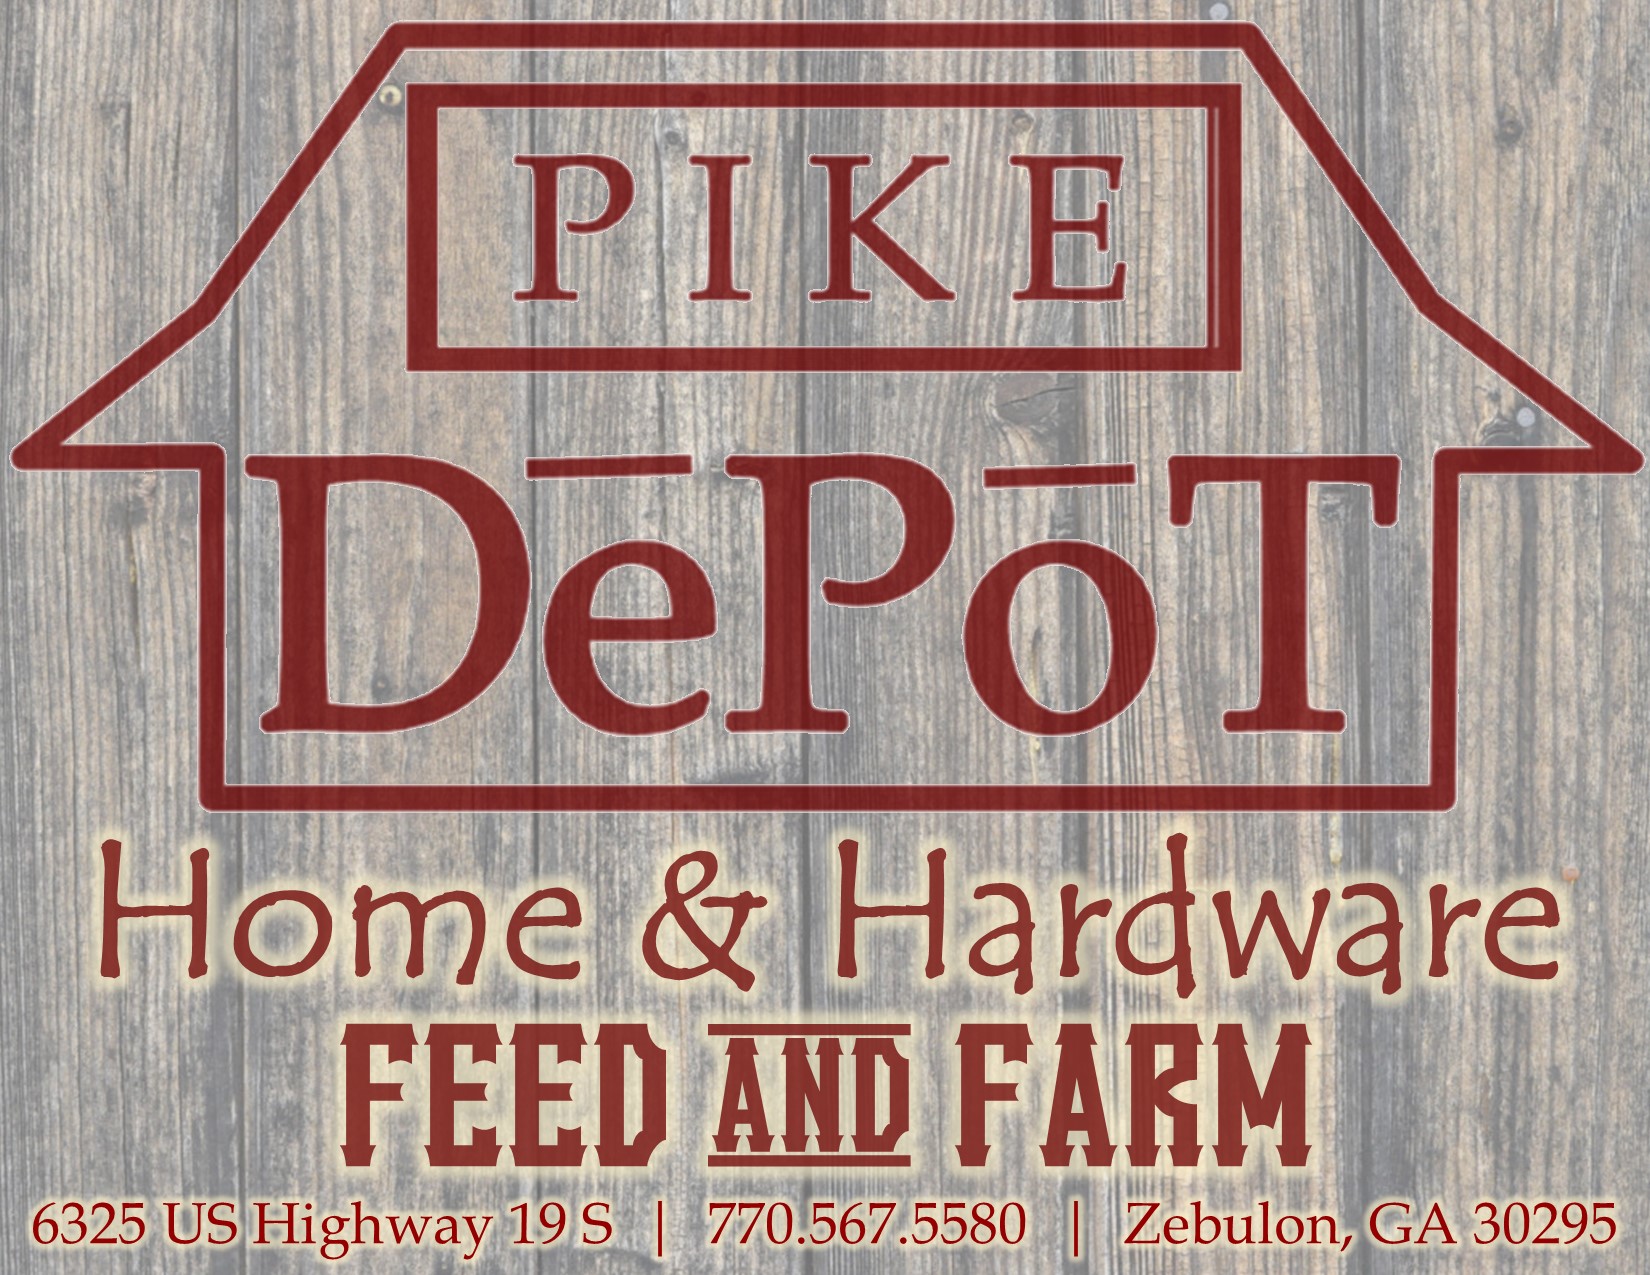 Pike Depot